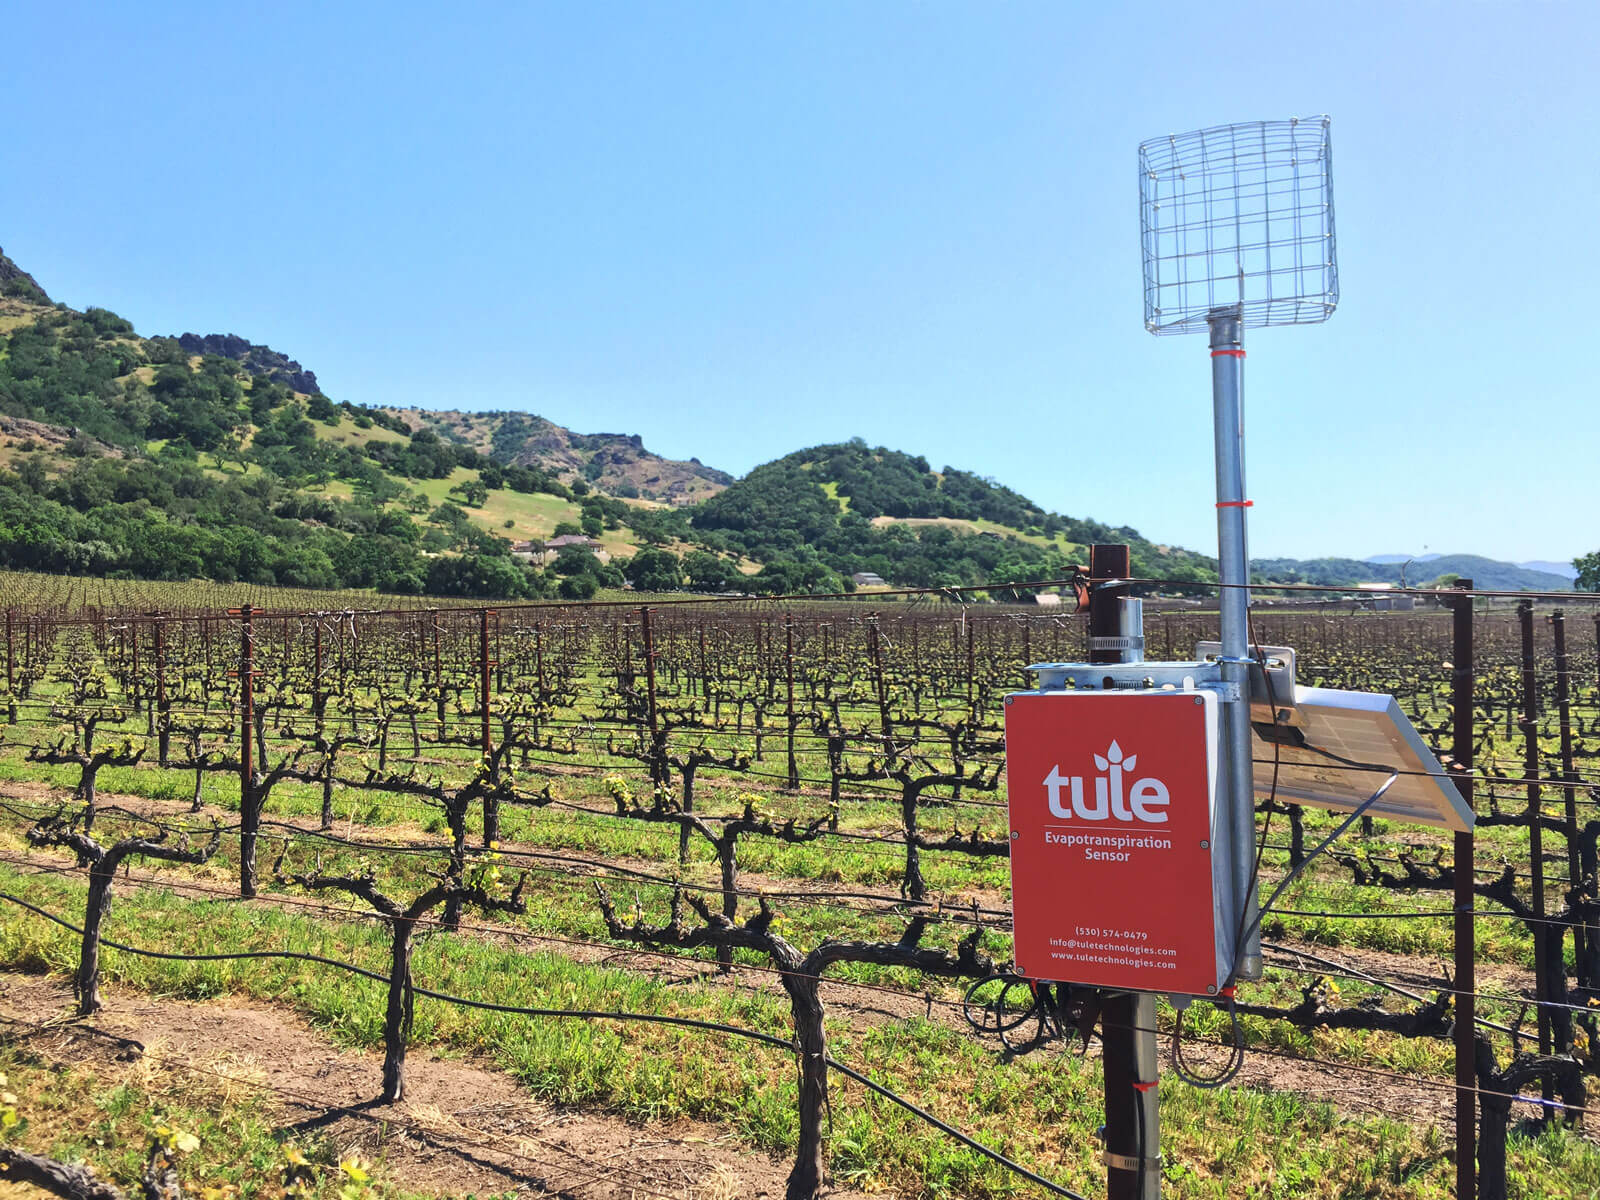 satellite-based Tule Technologies Evapotranspiration Sensor to cut water waste on farms